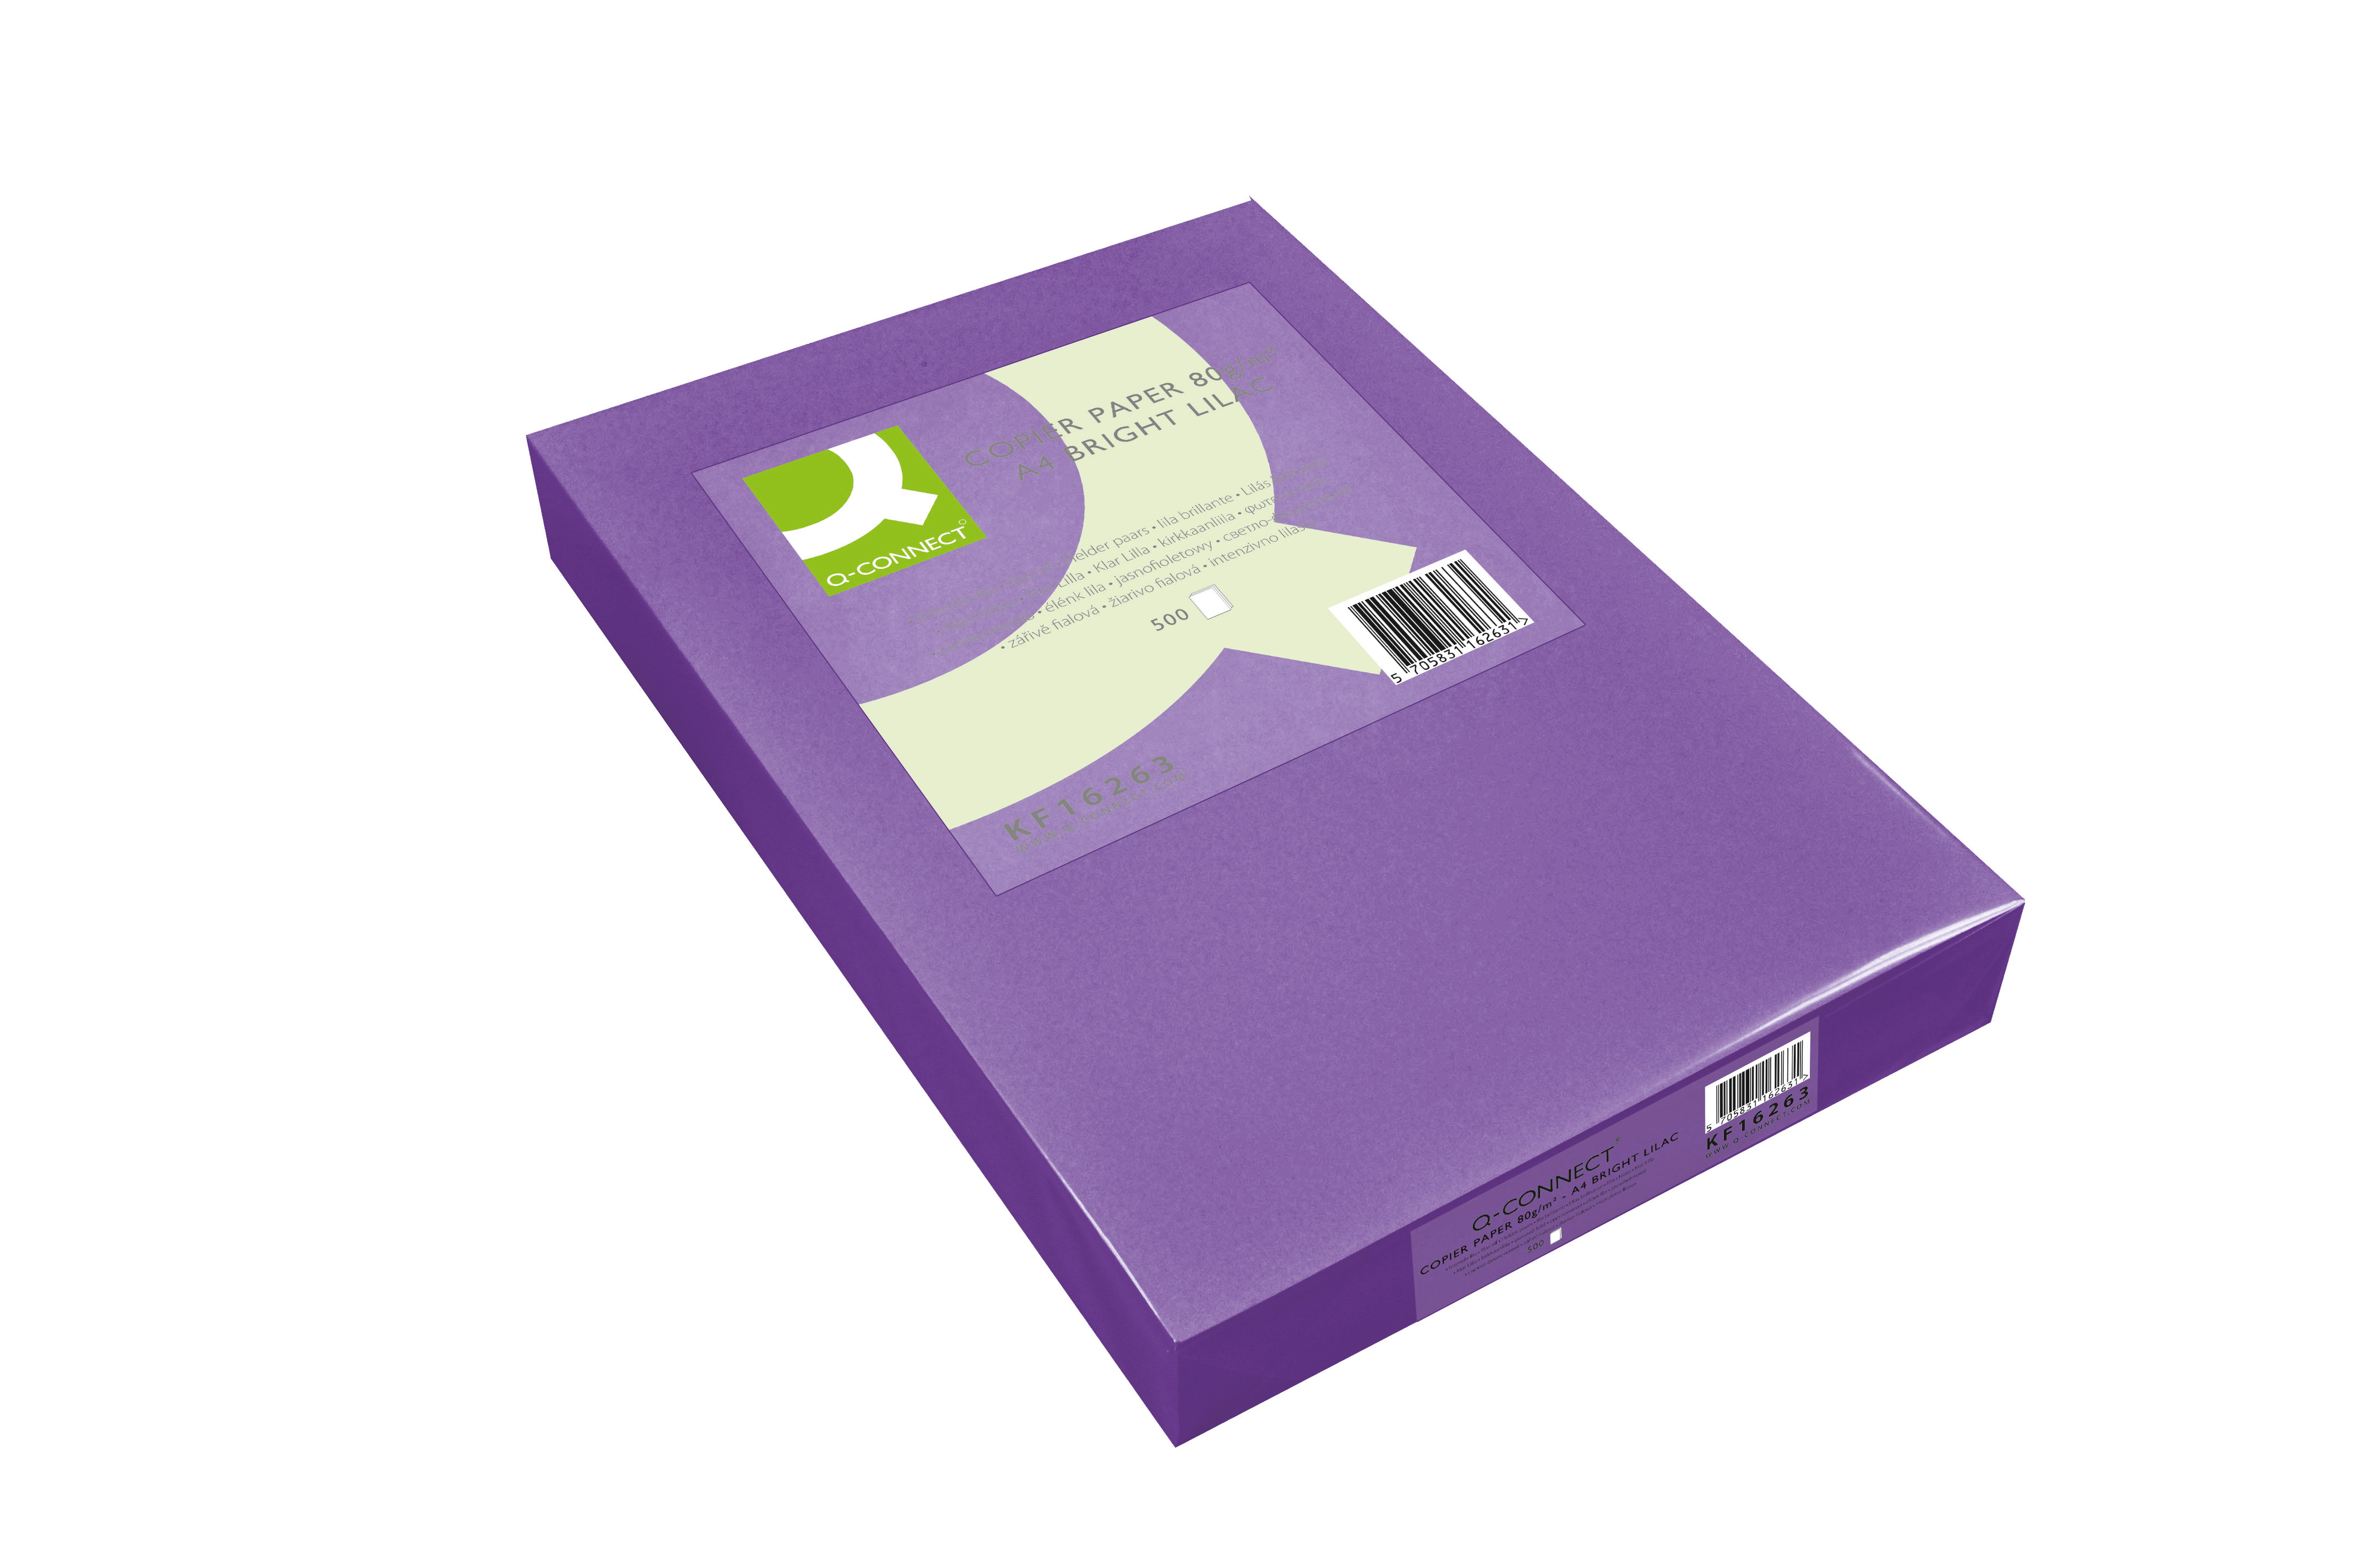 Quality Purple 80g A4 Copy Paper-箱裝(5包/箱)_影印紙_A-紙類用品_歷